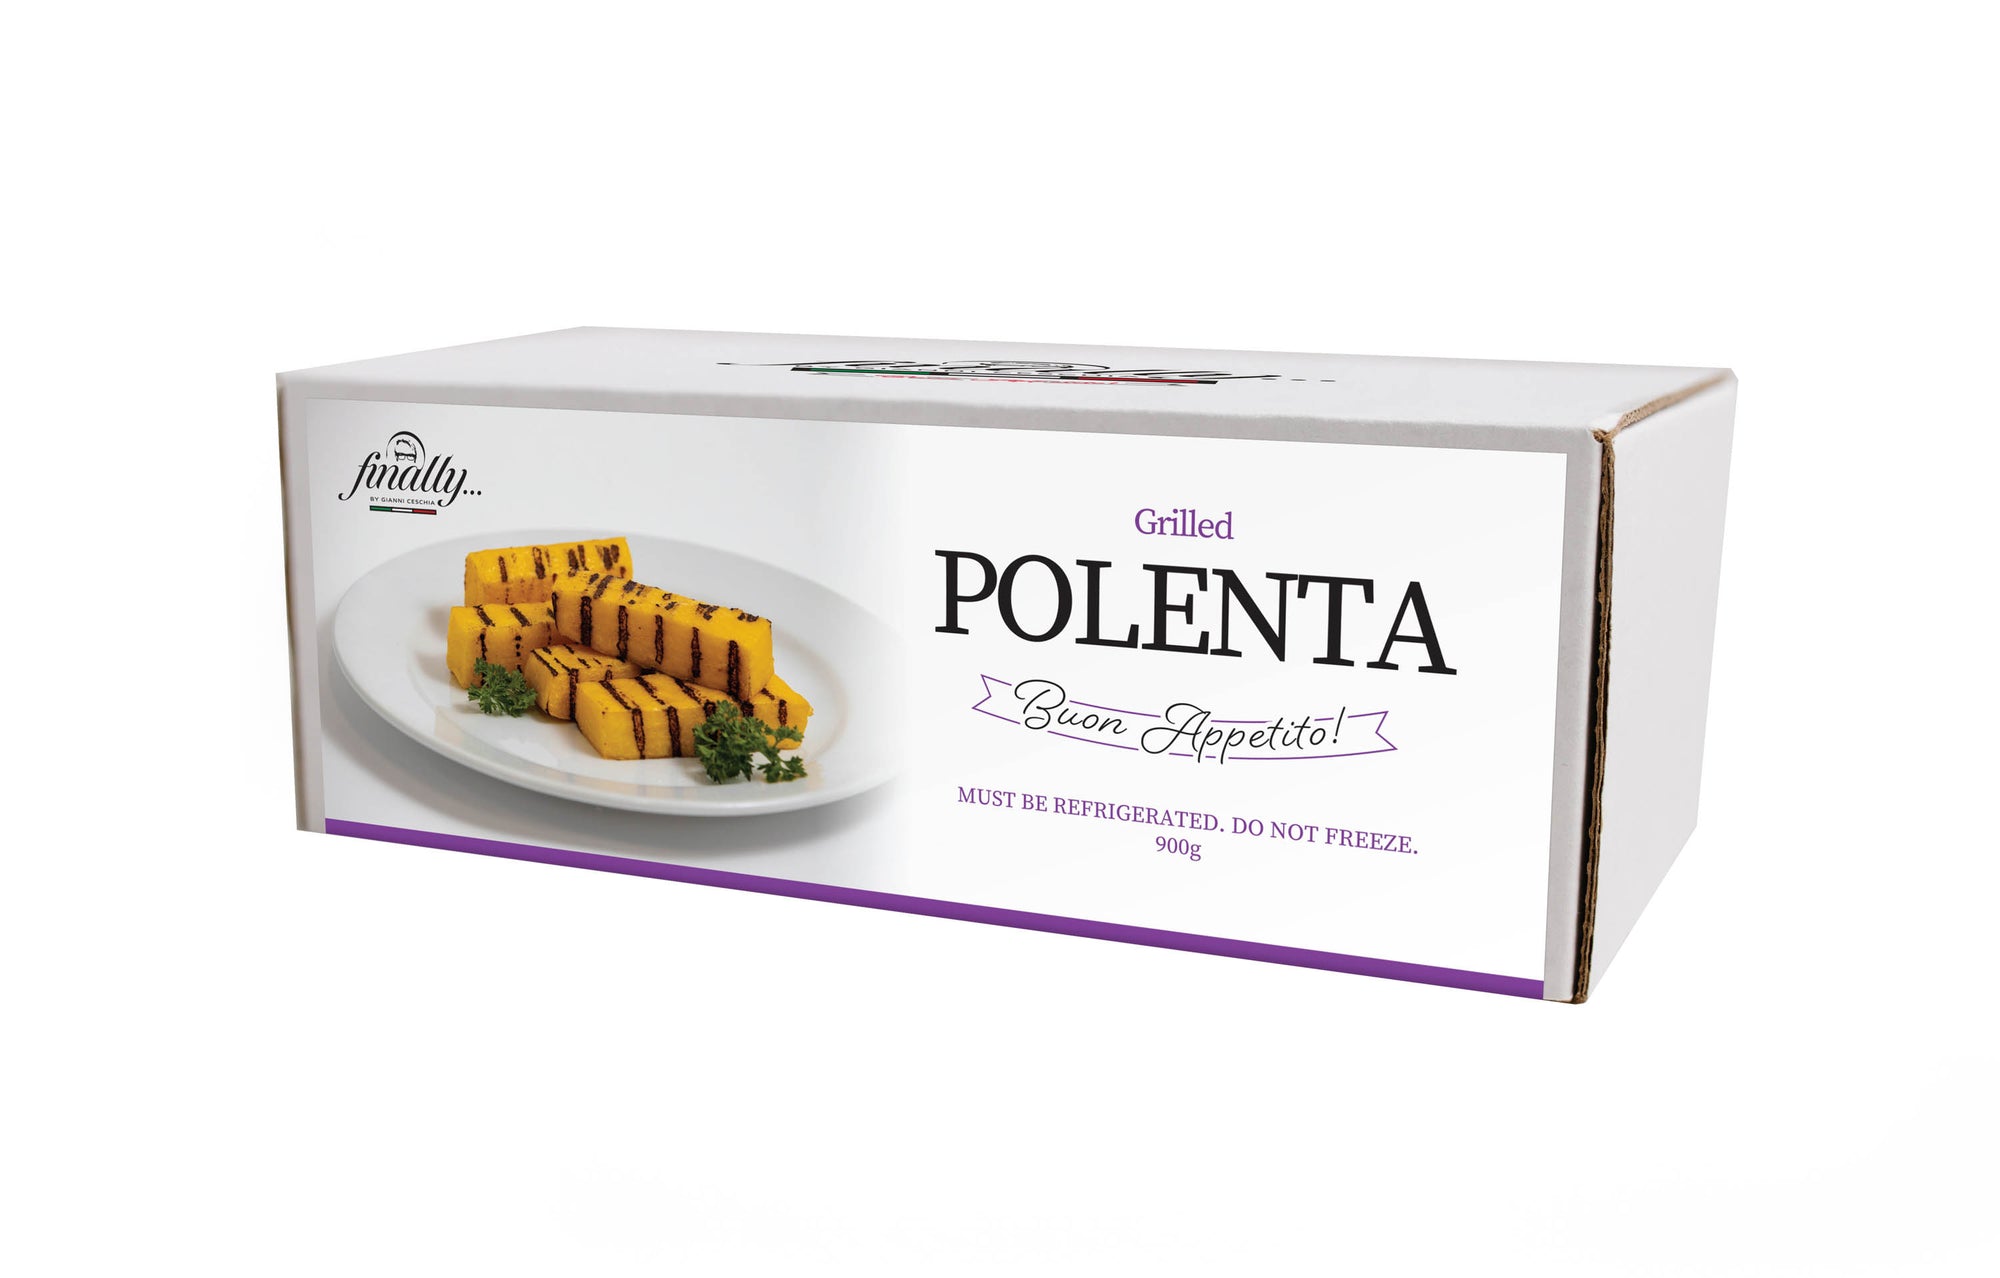 Grilled Polenta on a plate